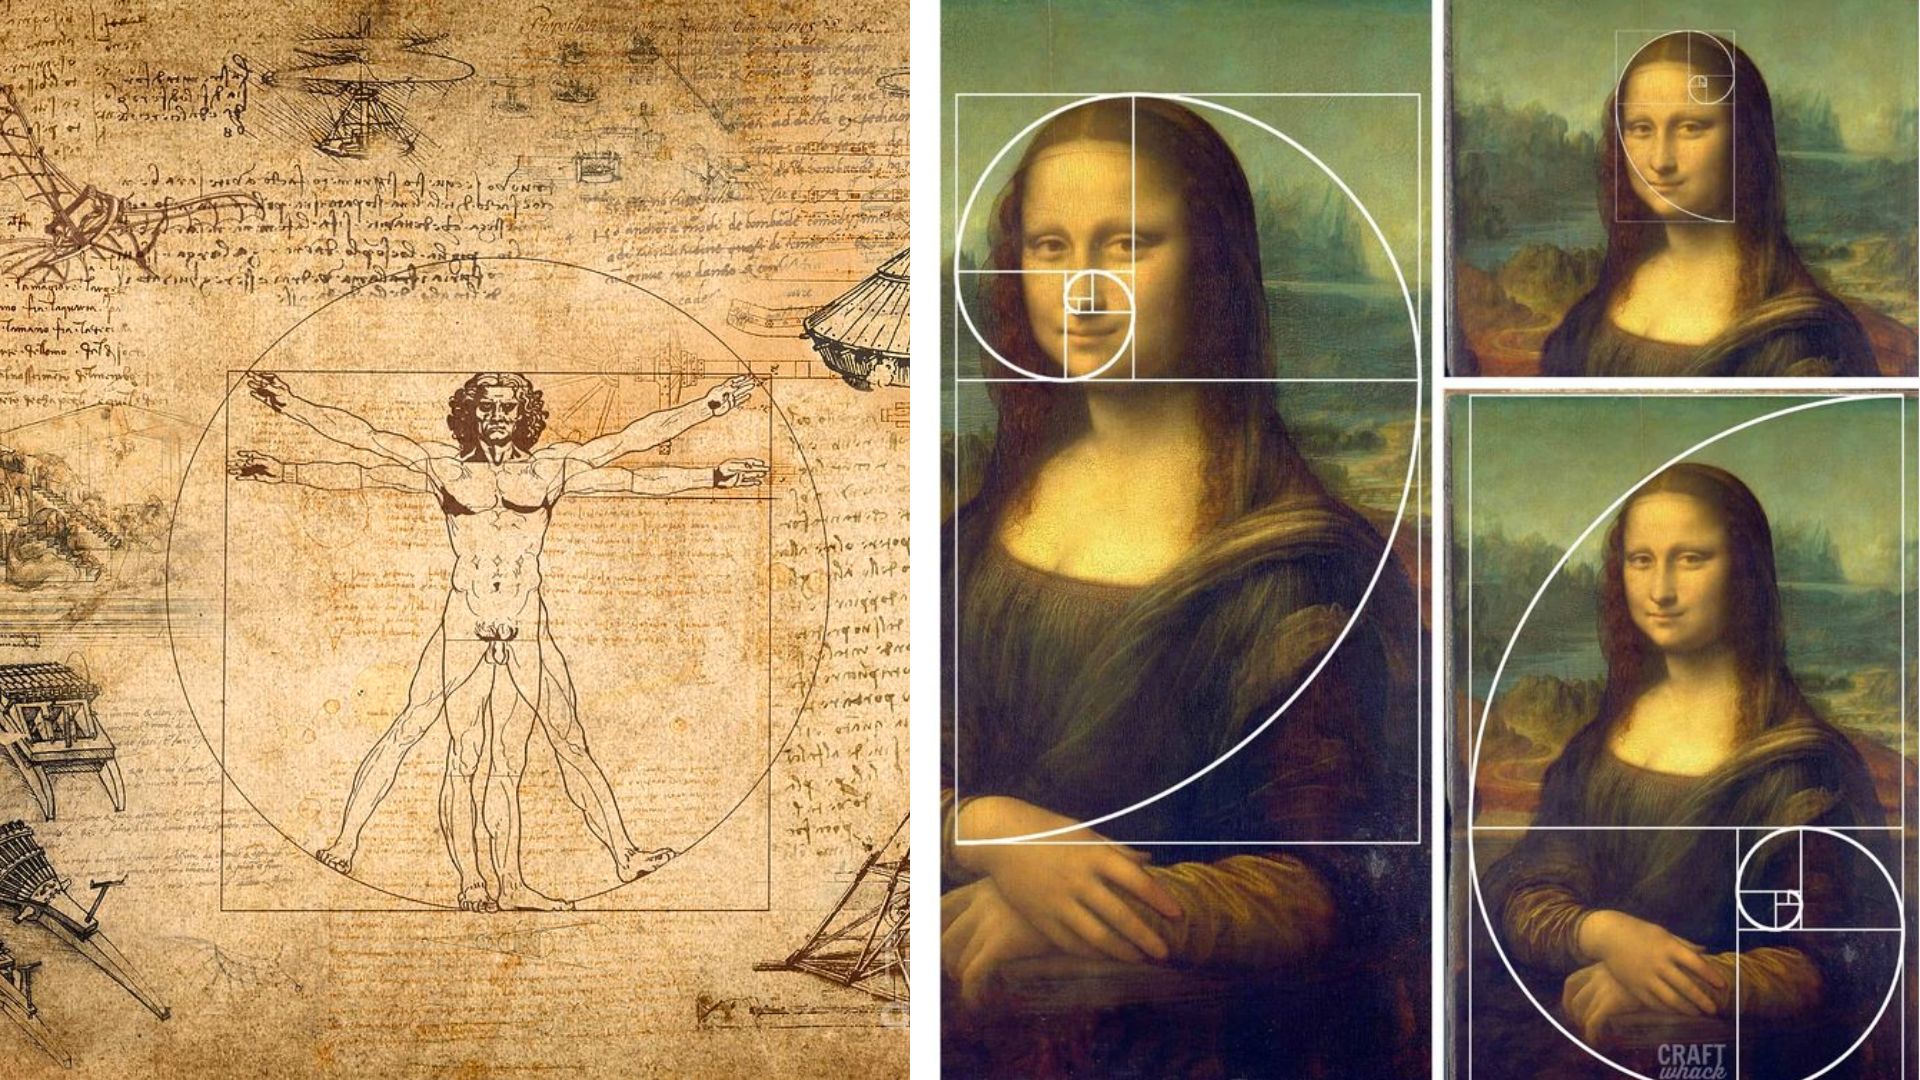 Leonardo da Vinci may have invented 3-D image with 'Mona Lisa